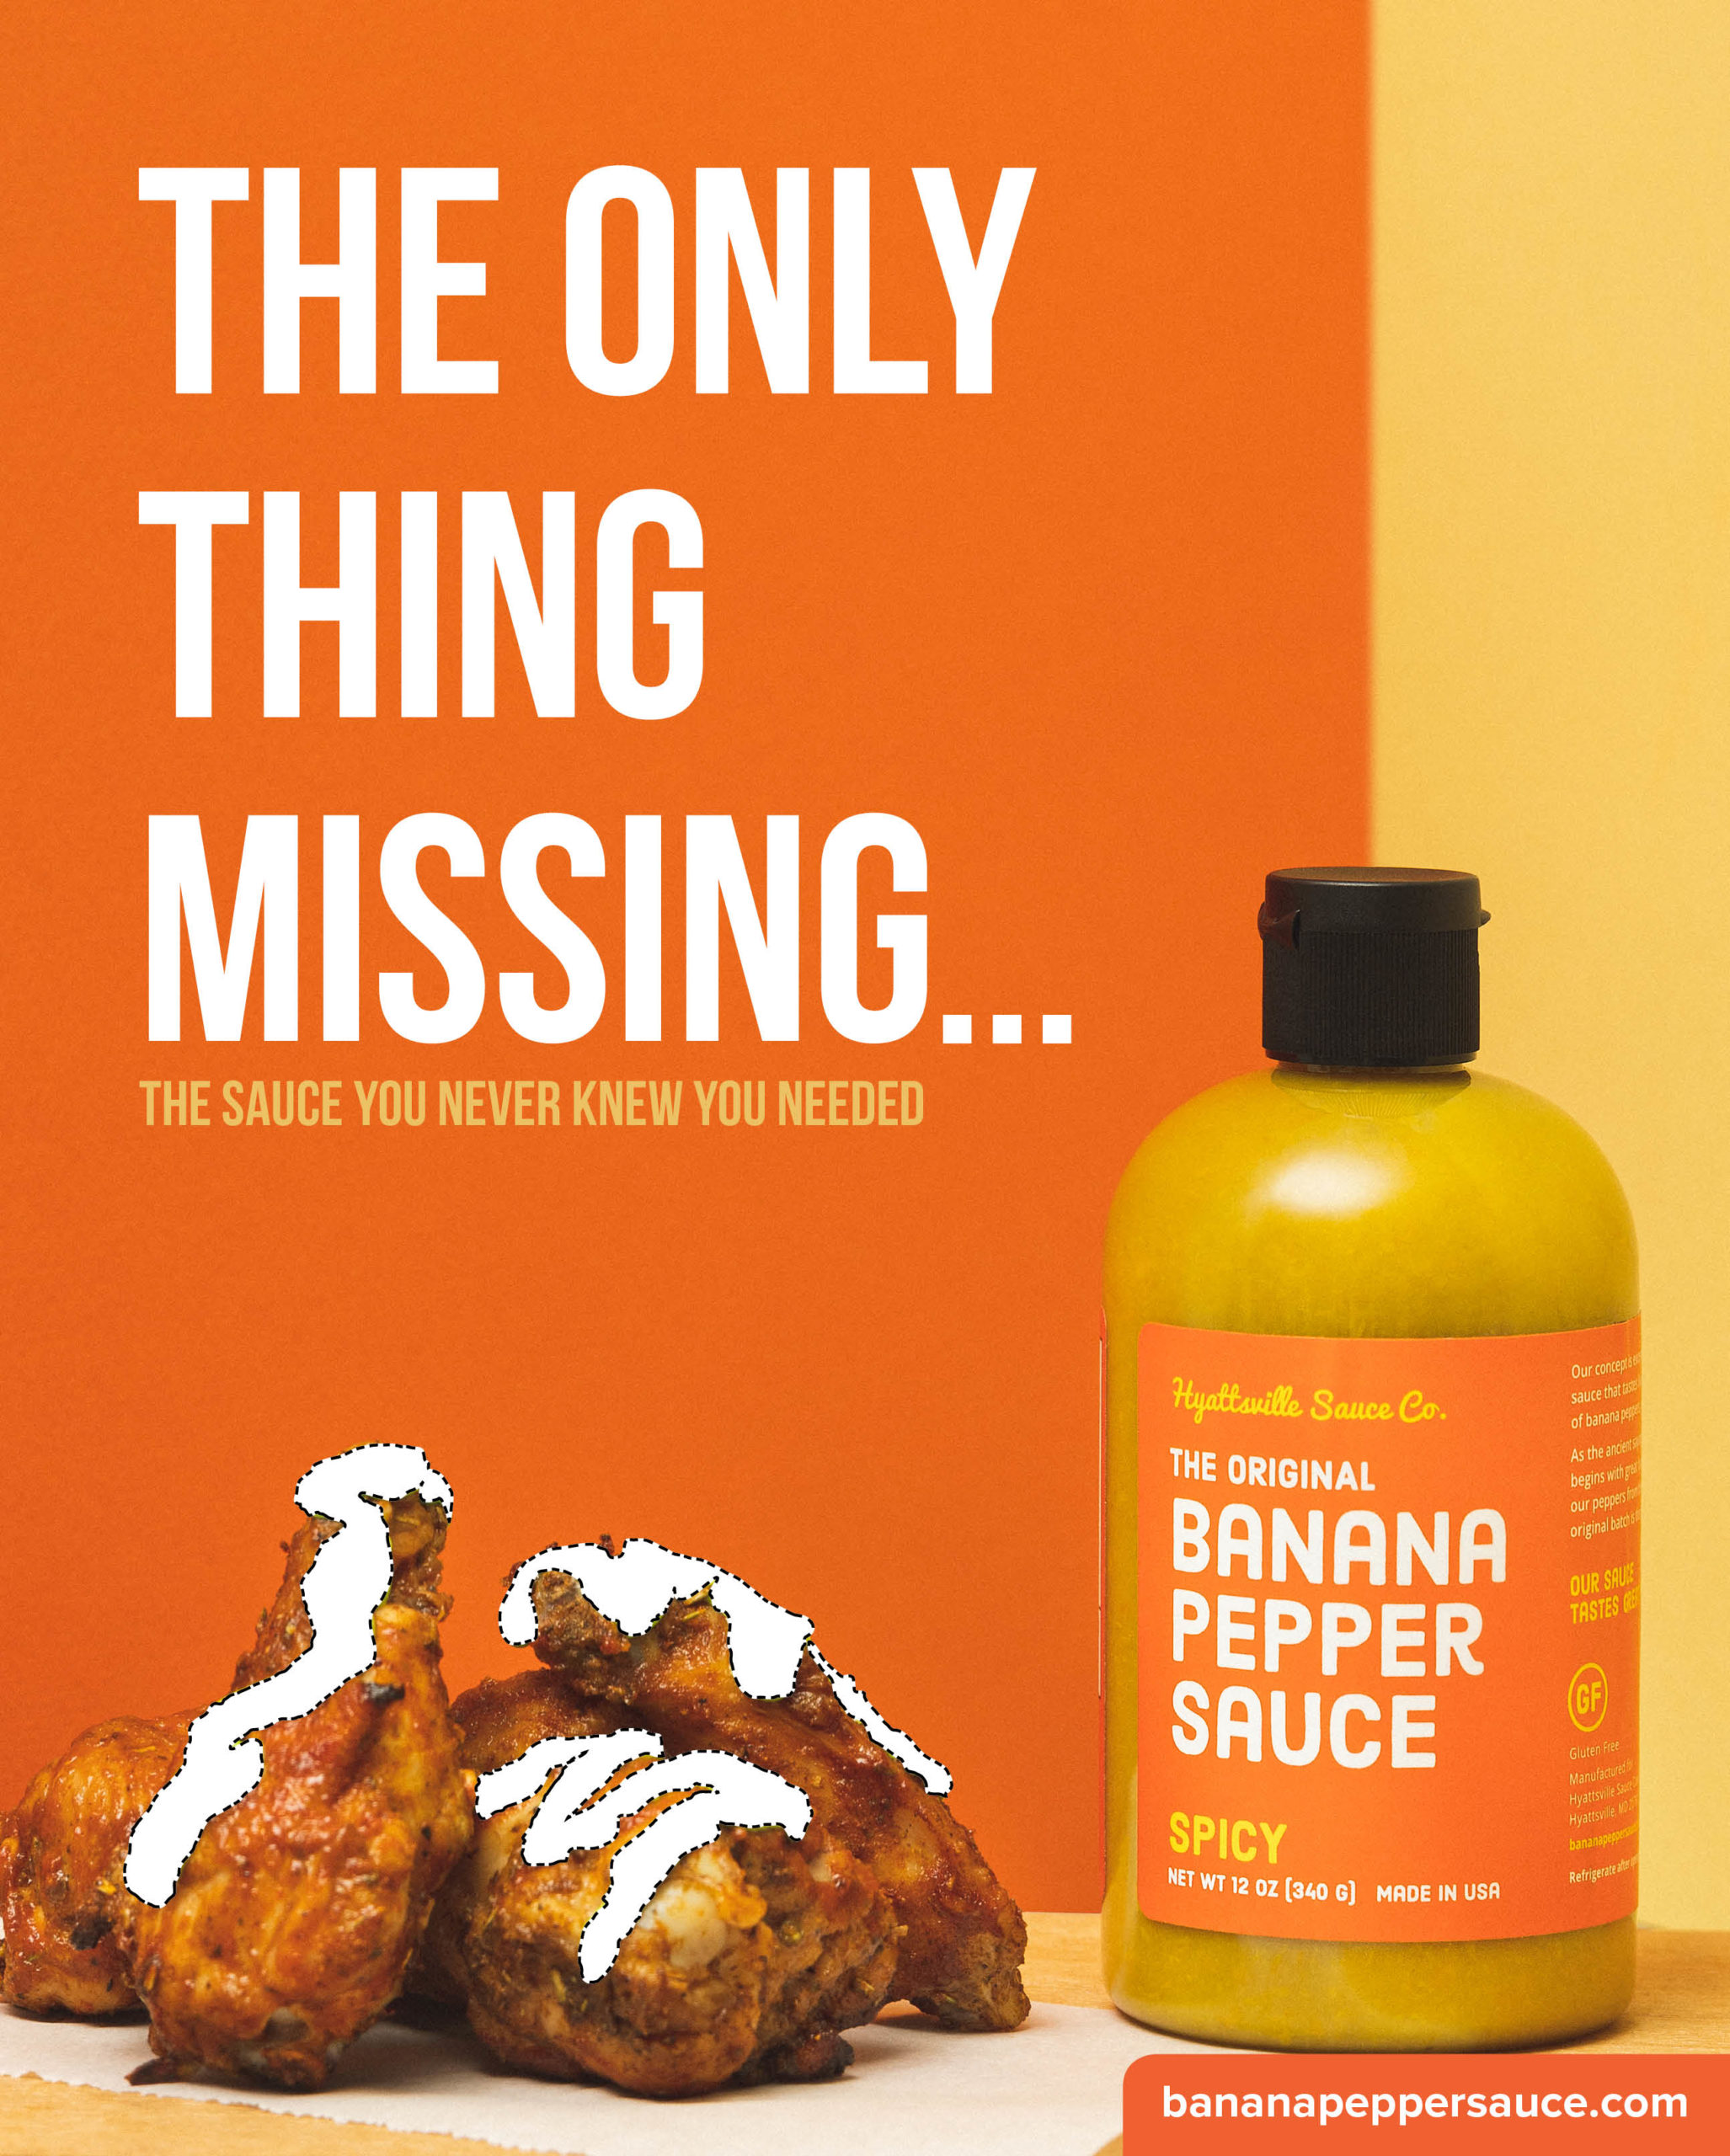 Hyattsville Sauce Company The Original Banana Pepper Sauce bottle Spicy flavor next to chicken graphic with slogan and website address